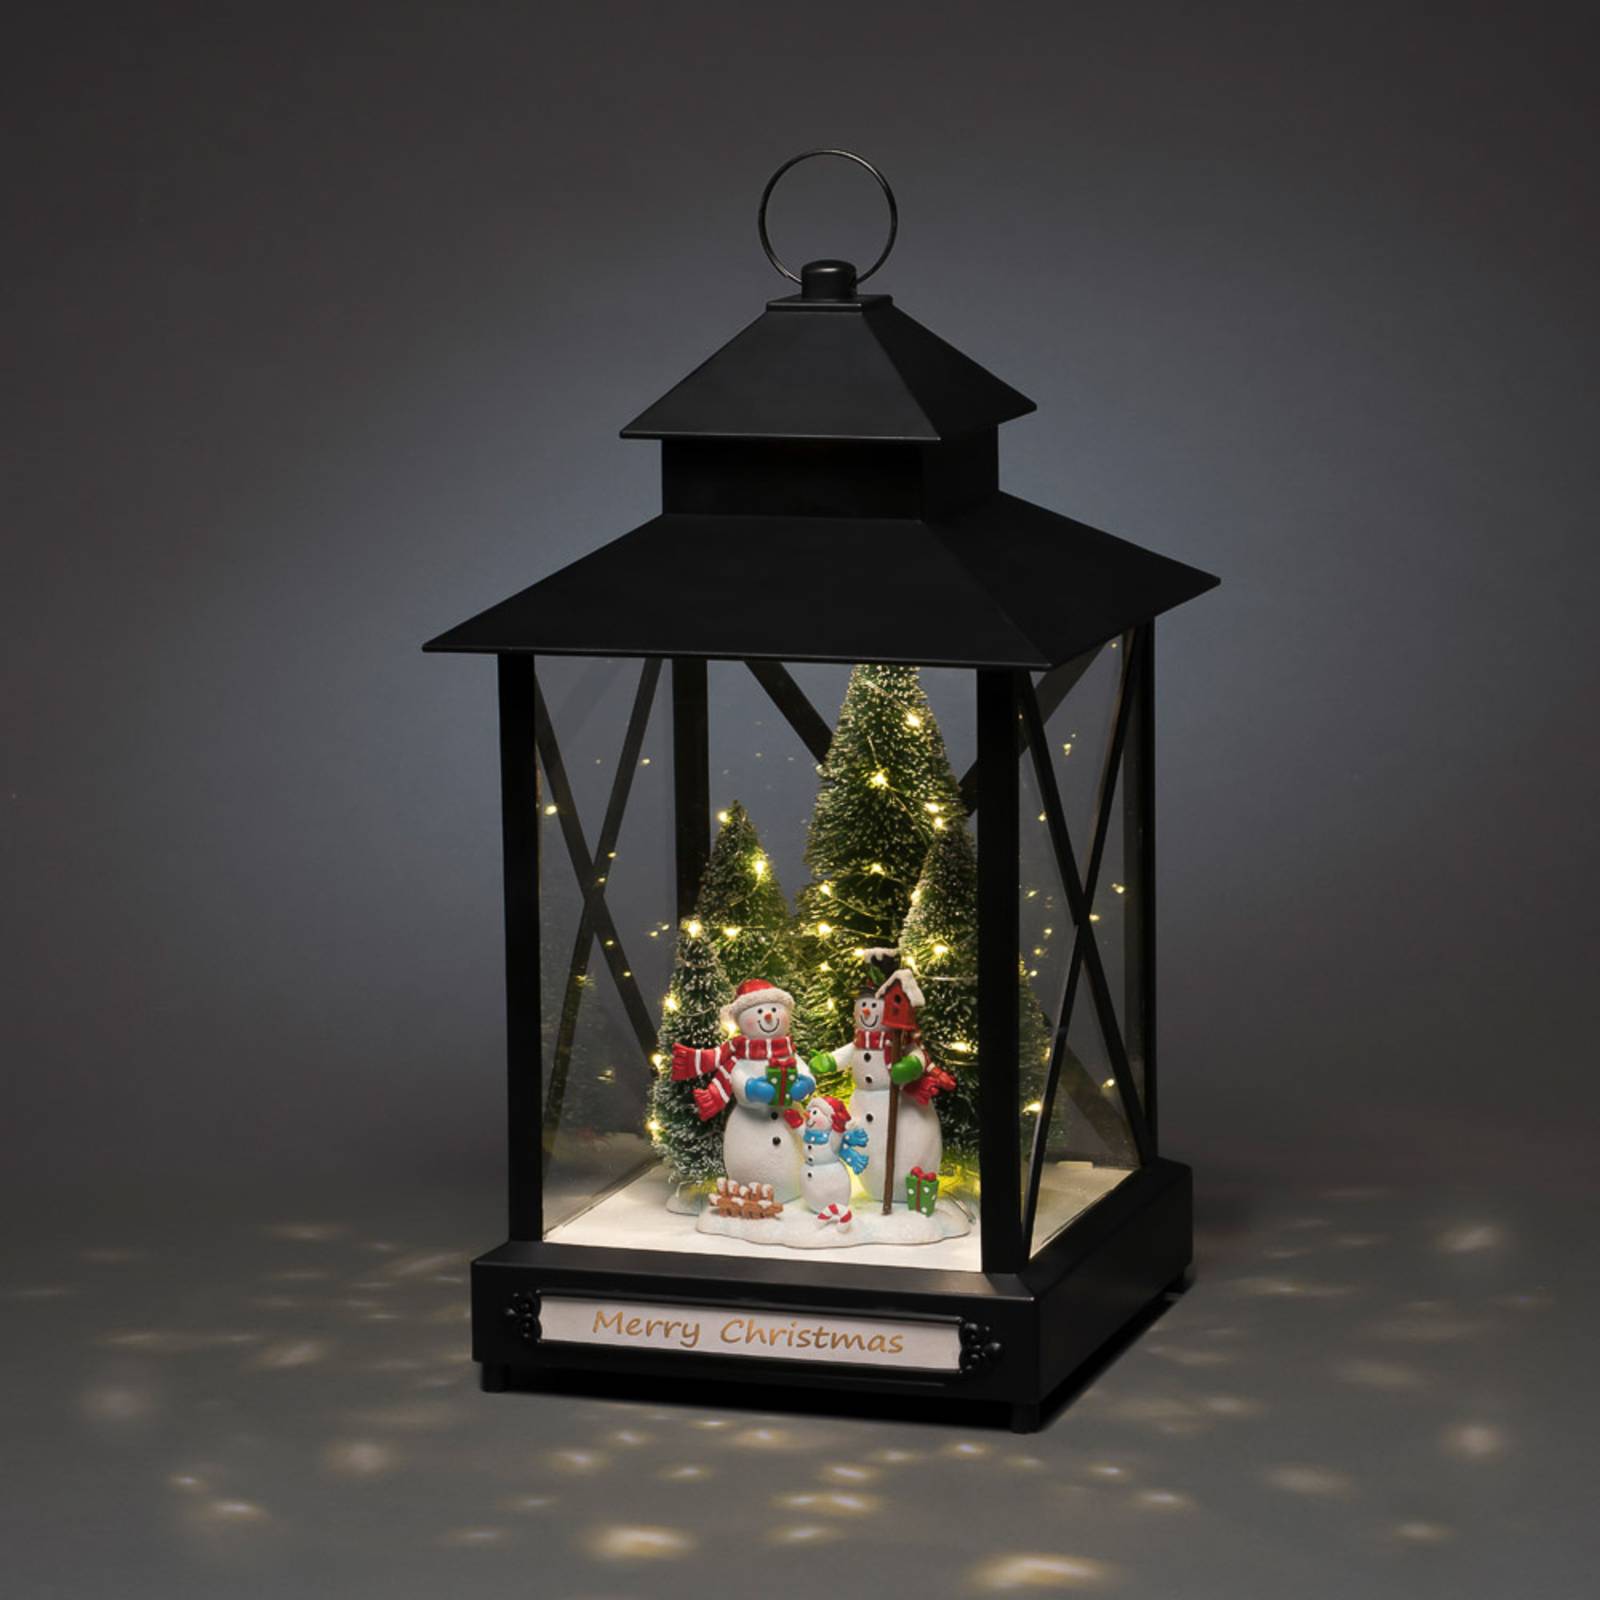 Konstsmide Christmas LED-Dekolaterne Schneemänner schwarz IP44 42cm